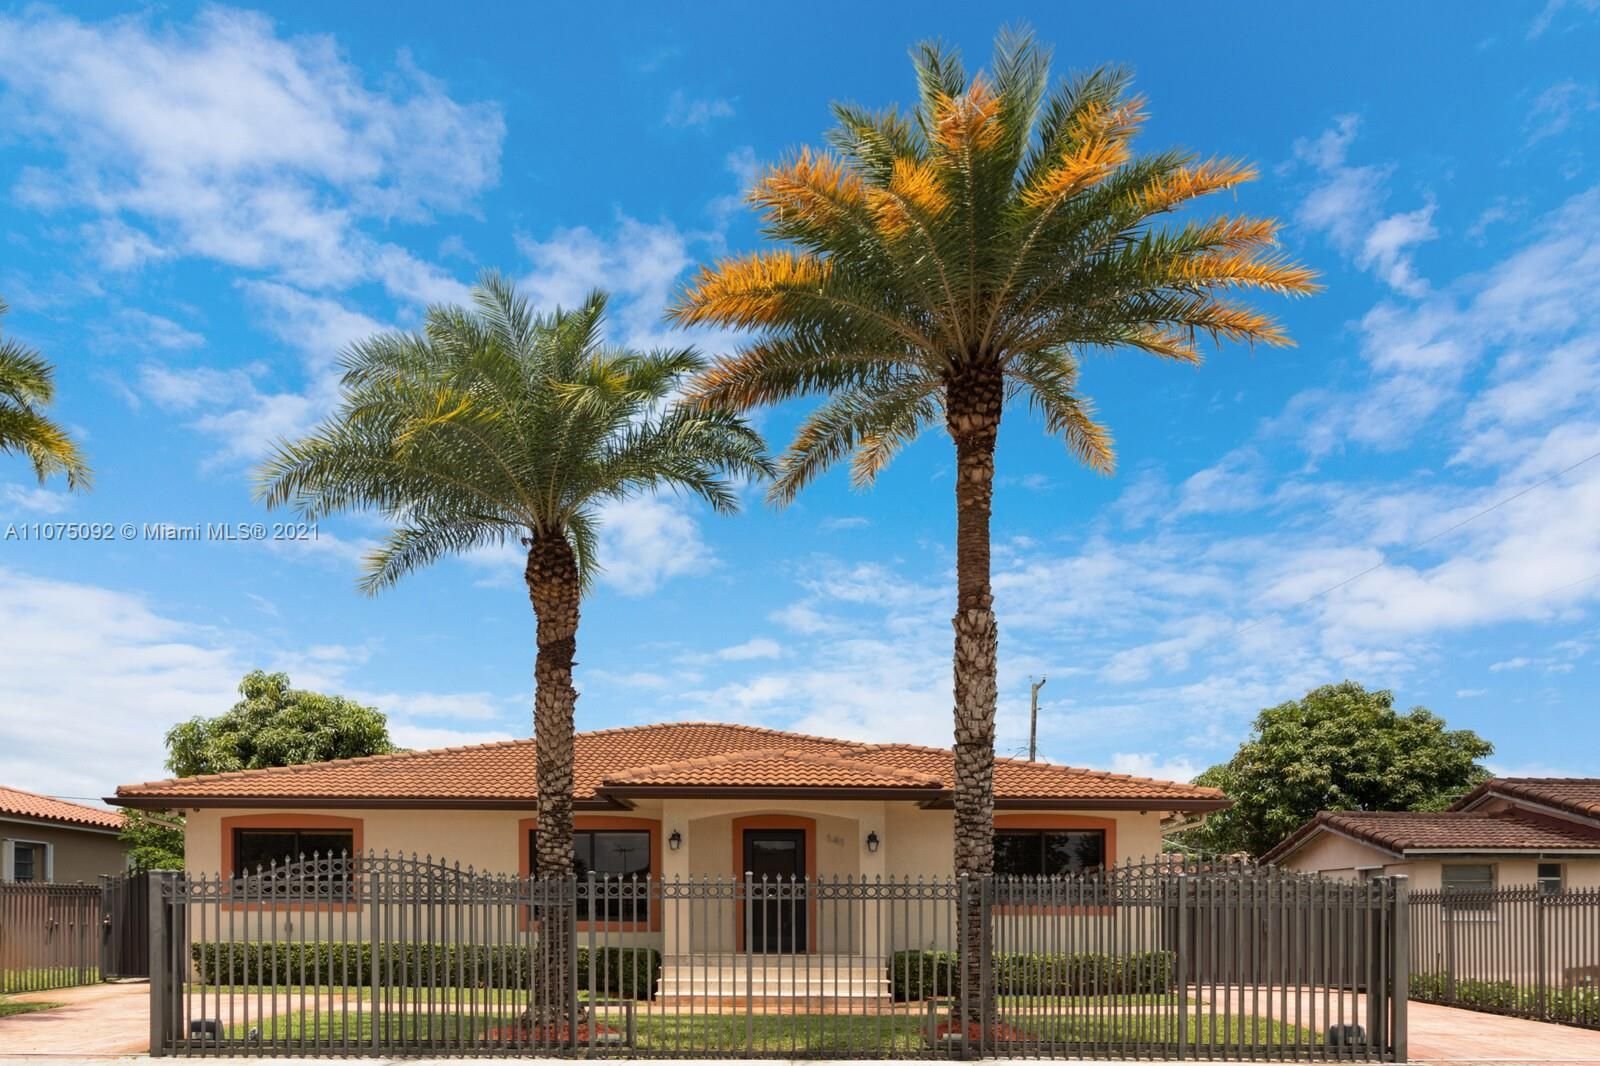 Real estate property located at 141 51st Ct, Miami-Dade County, Miami, FL